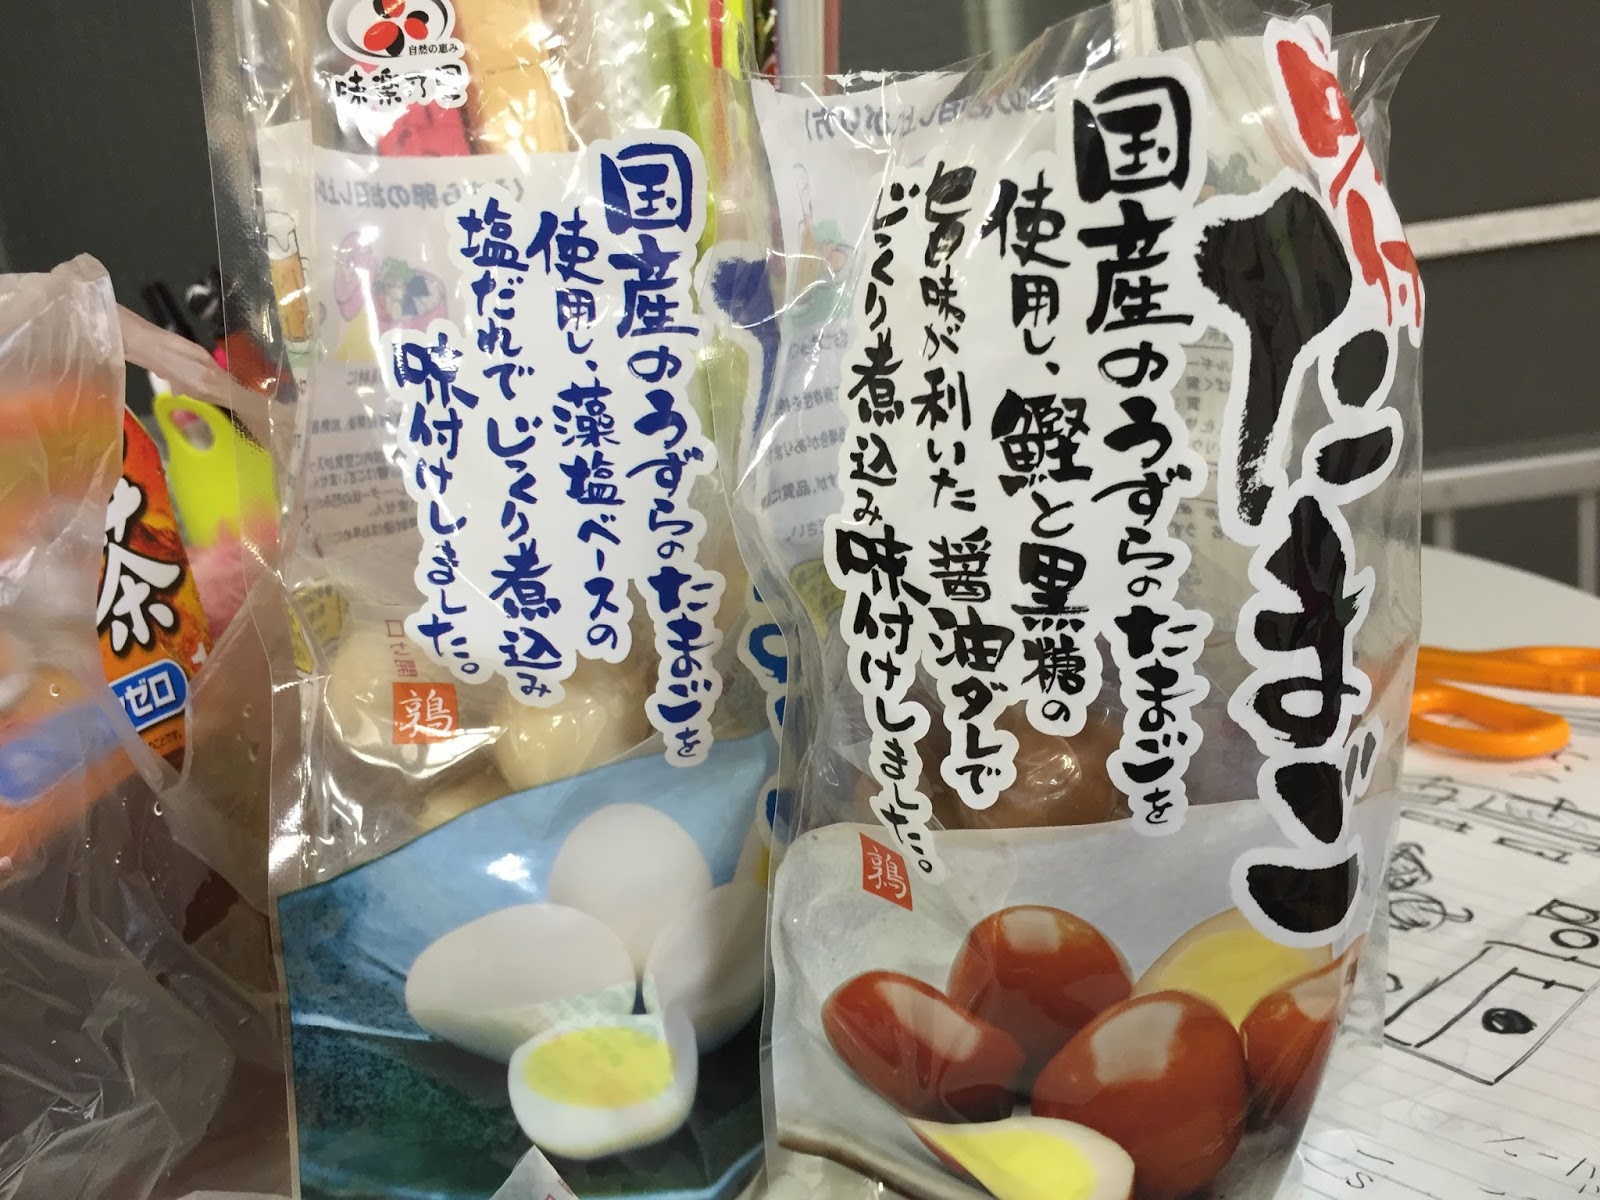 14zawa Blog Asb メンバー村田さんの差し入れ 千年屋のうずらの卵が美味過ぎる あなたは醤油派 それとも塩派